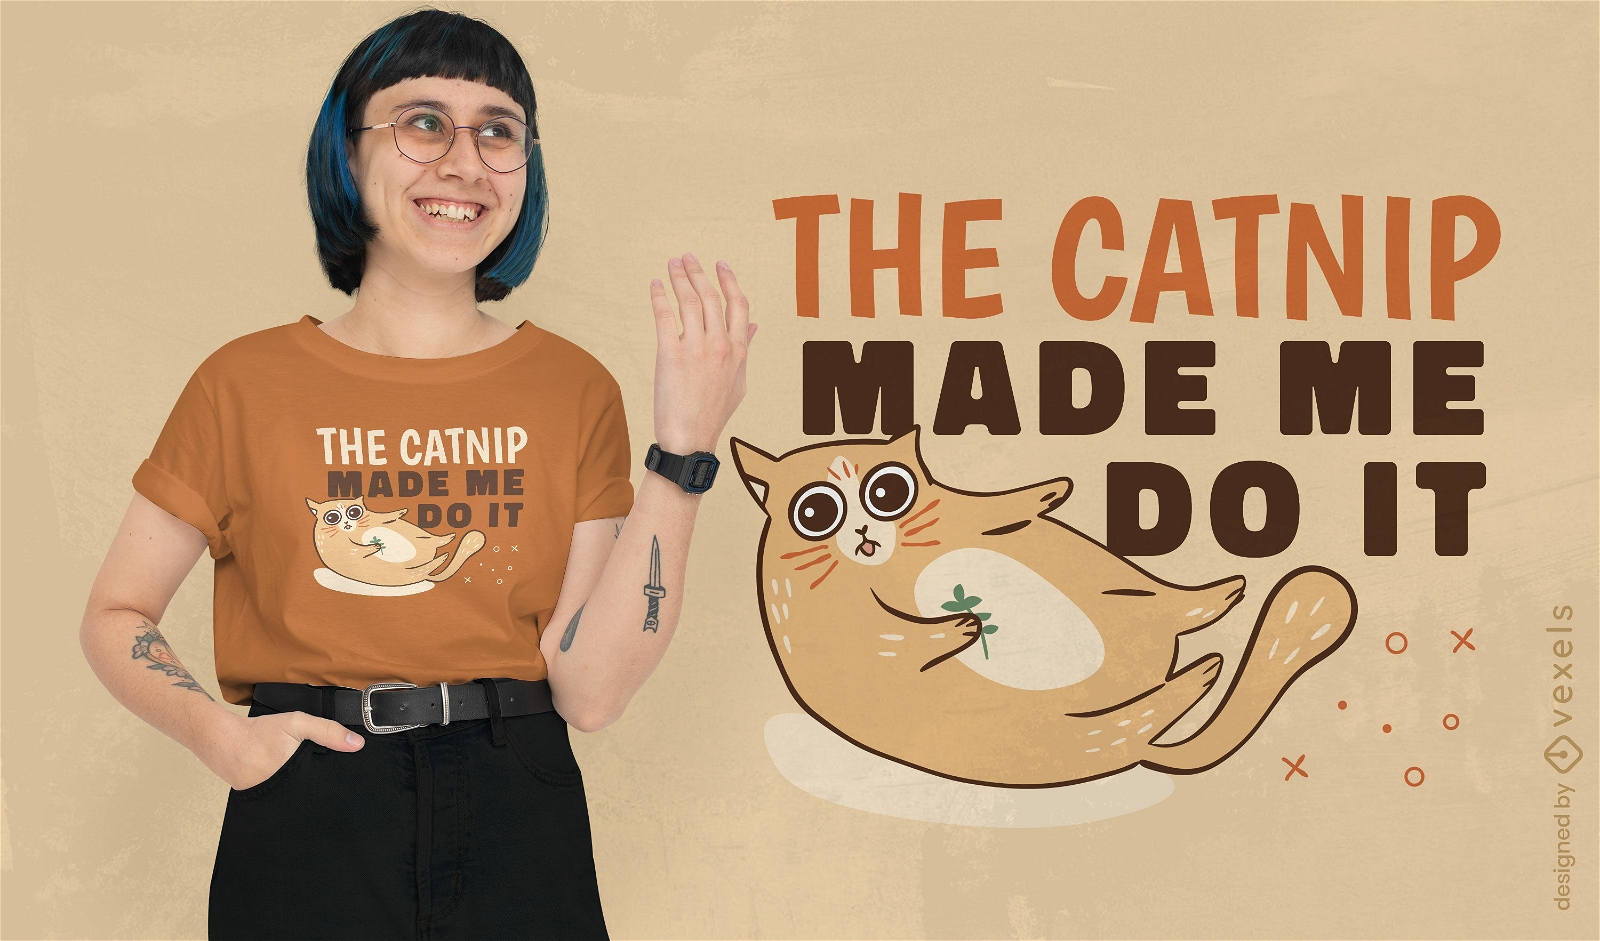 Diseño de camiseta con cita de catnip high cat